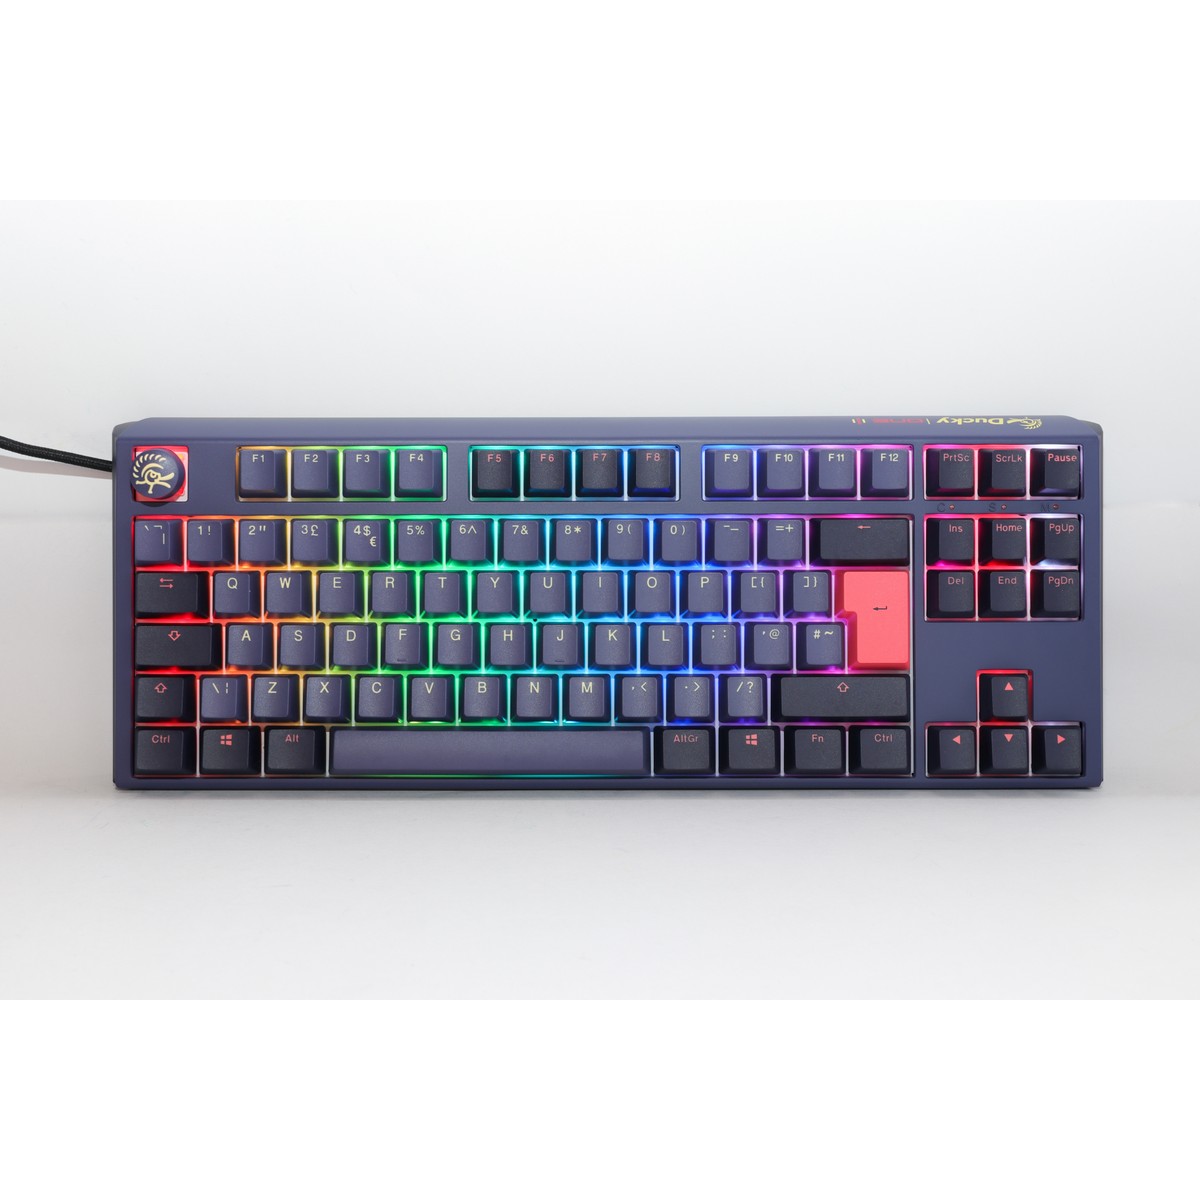 Ducky One 3 Cosmic TKL 80% USB RGB Mechanical Gaming Keyboard Cherry MX Blue Switch - UK Layout